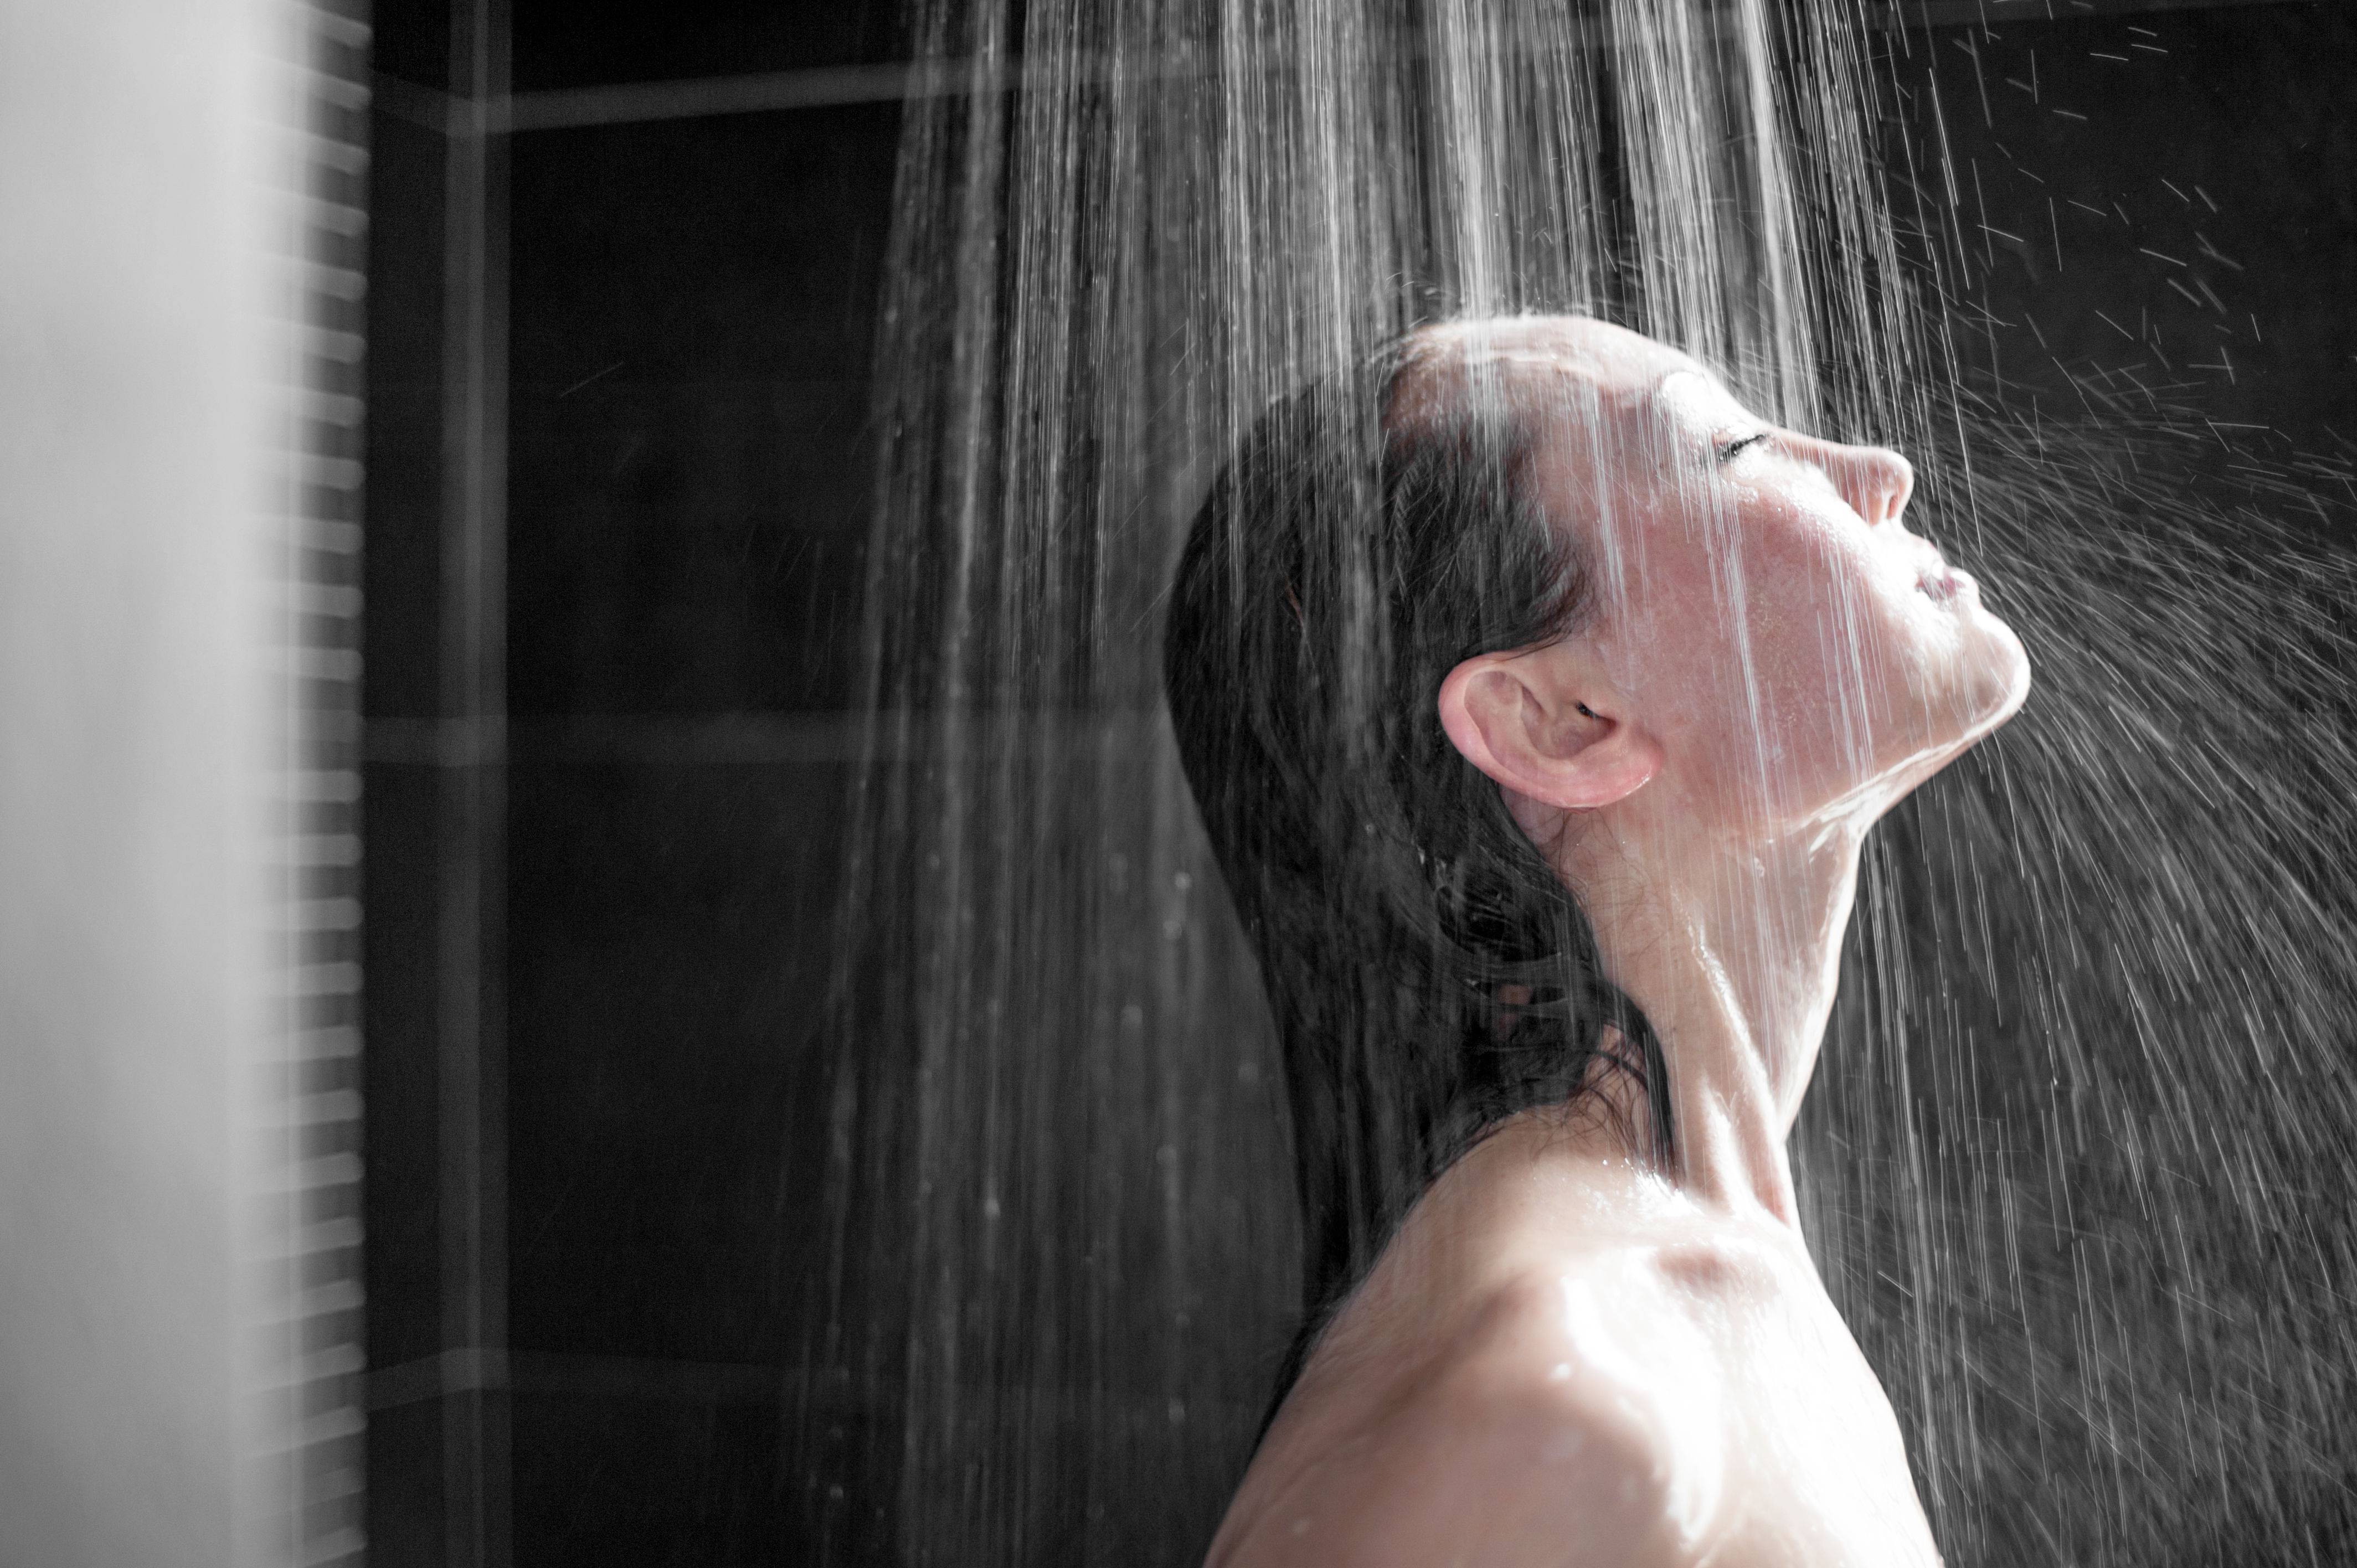 She a shower now. Человек в душе. Человек под душем.